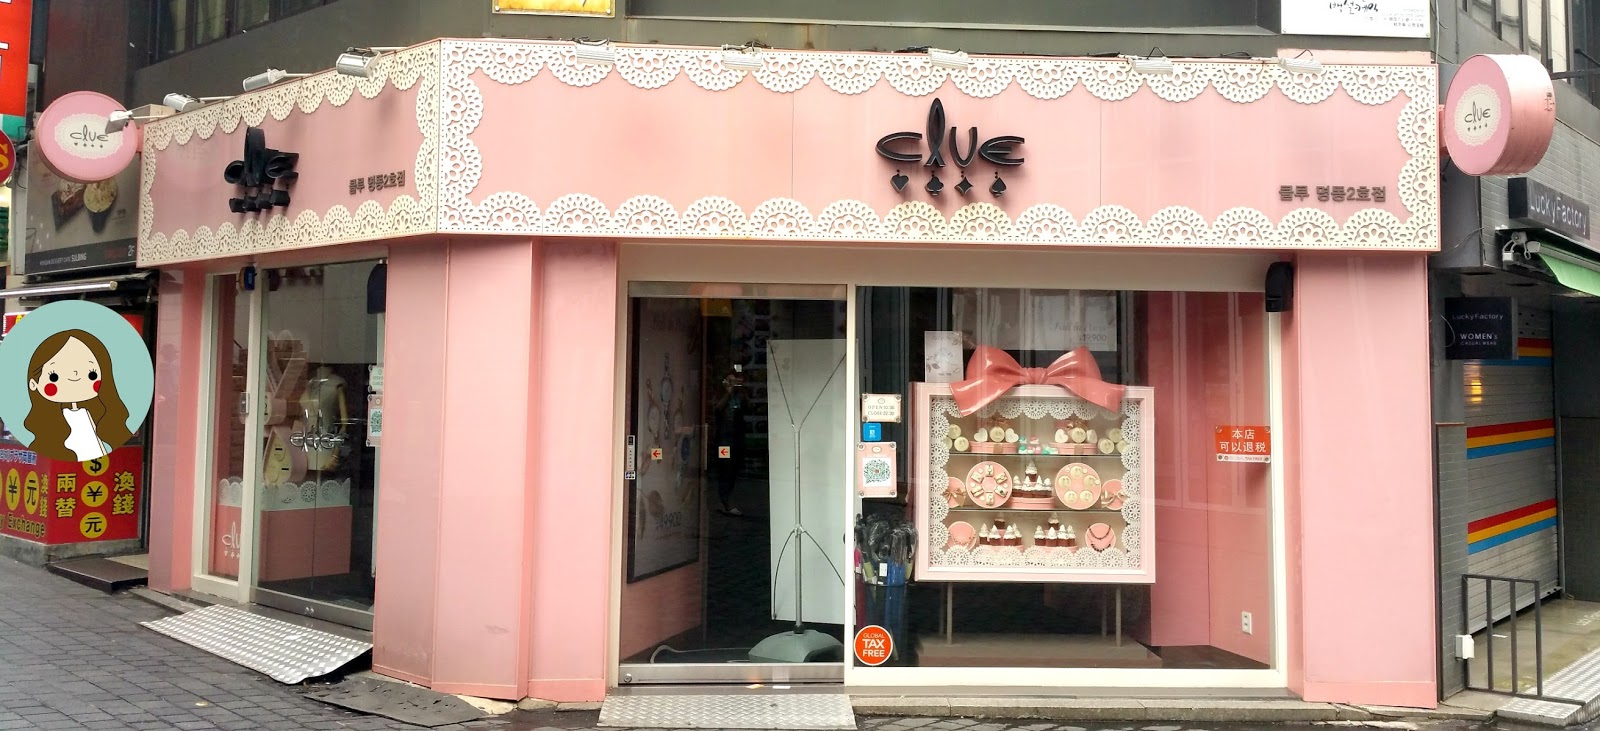 Myeongdong ( Seoul) Beauty Shopping